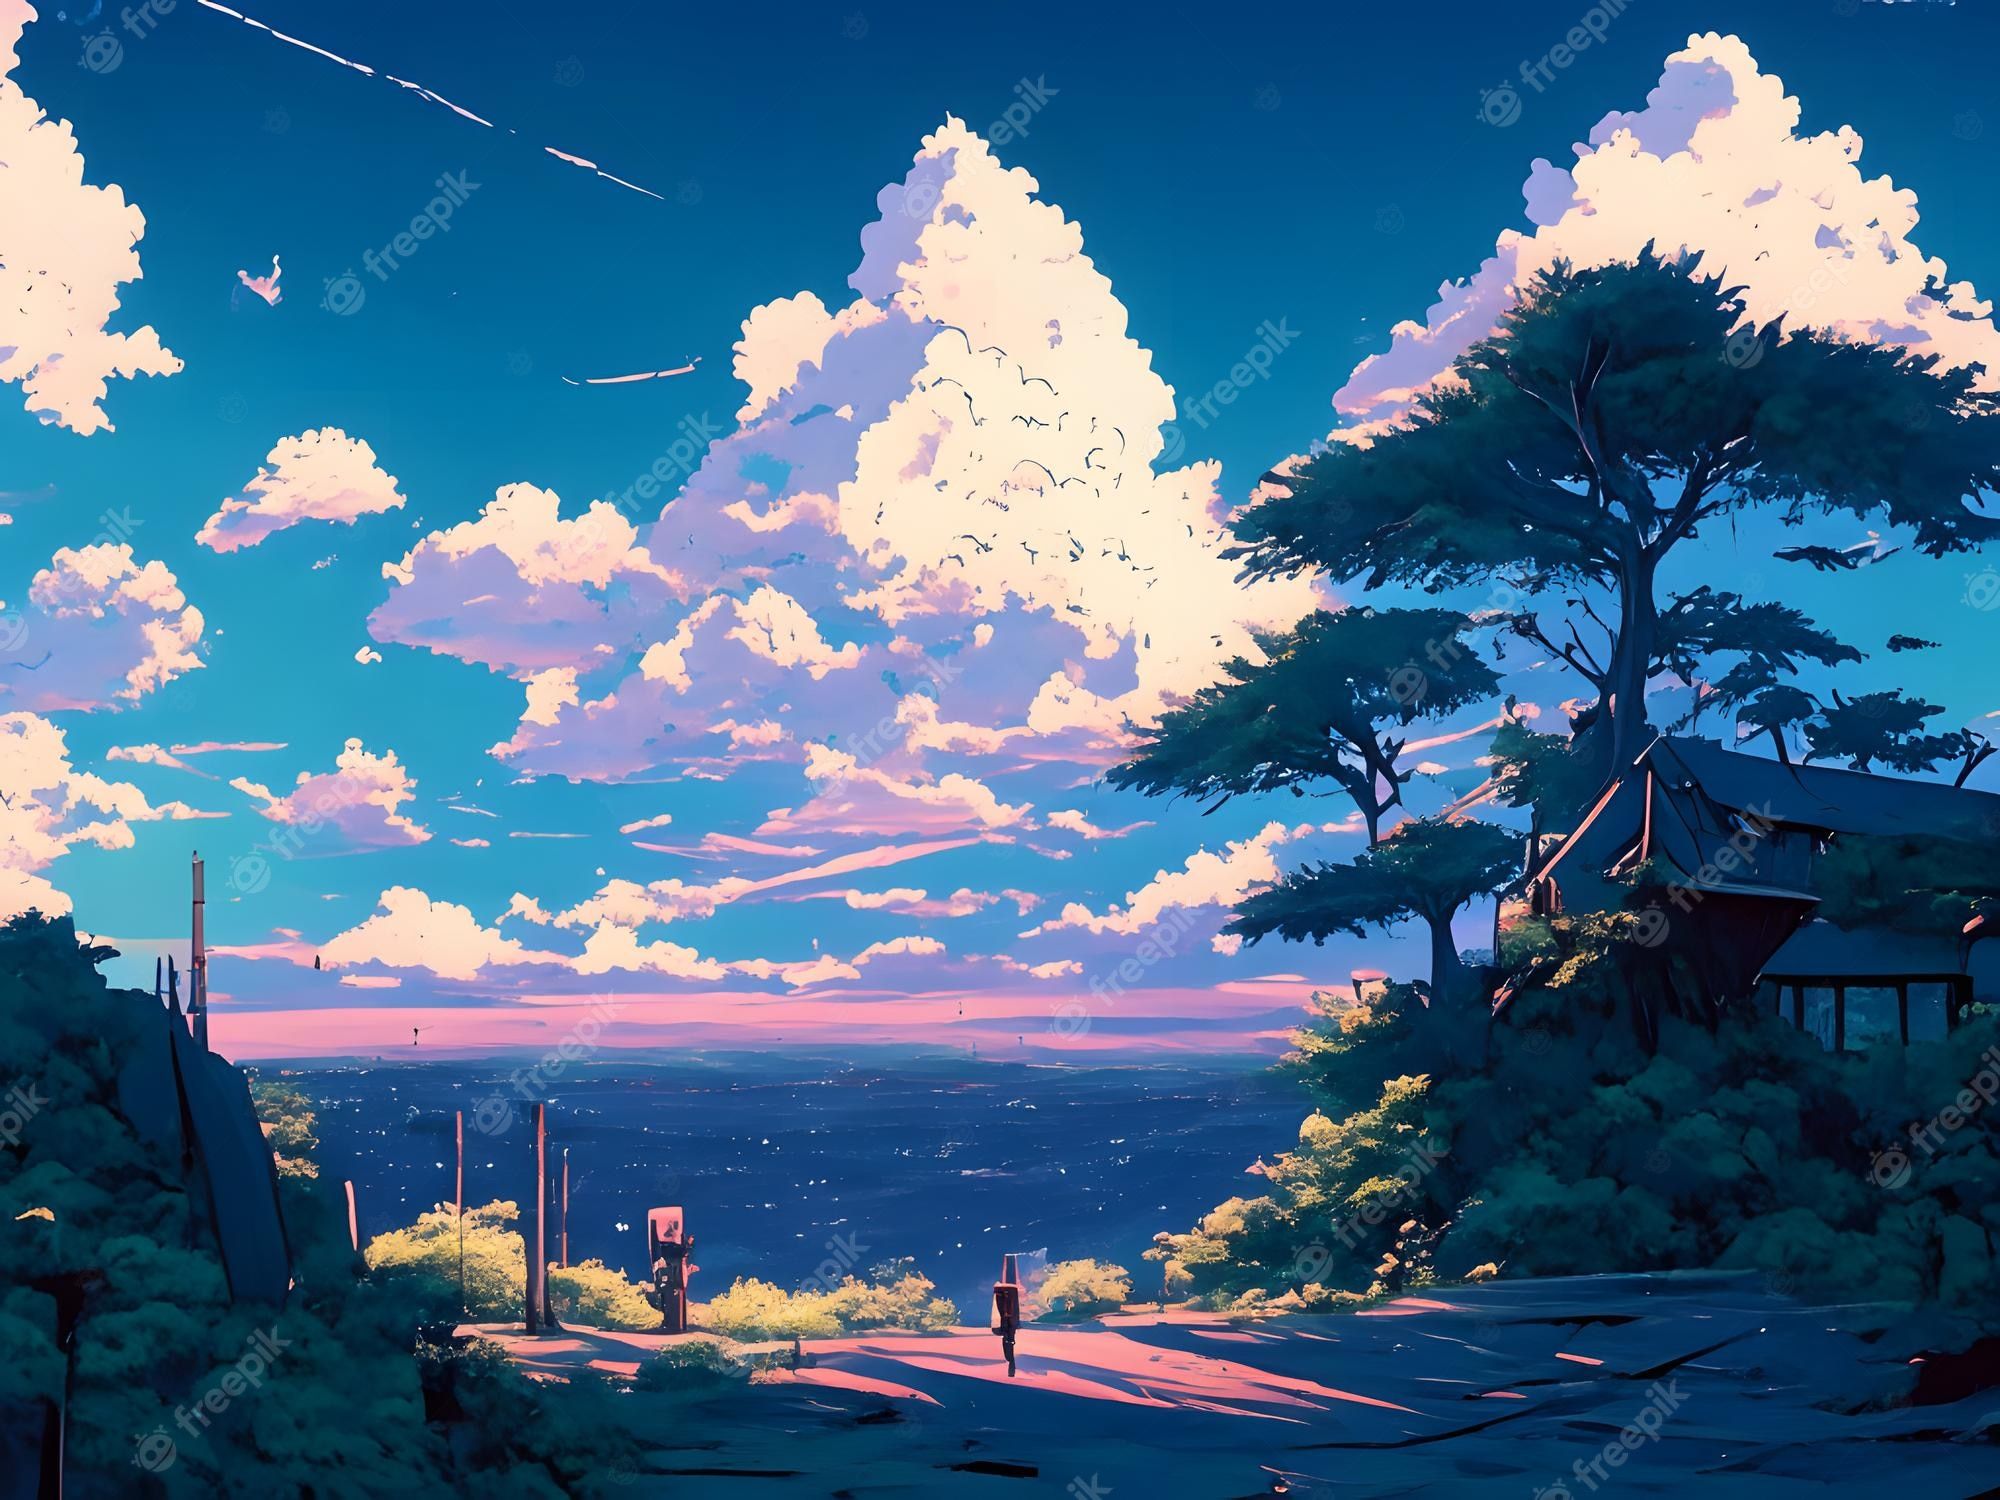 Anime Landscape Image